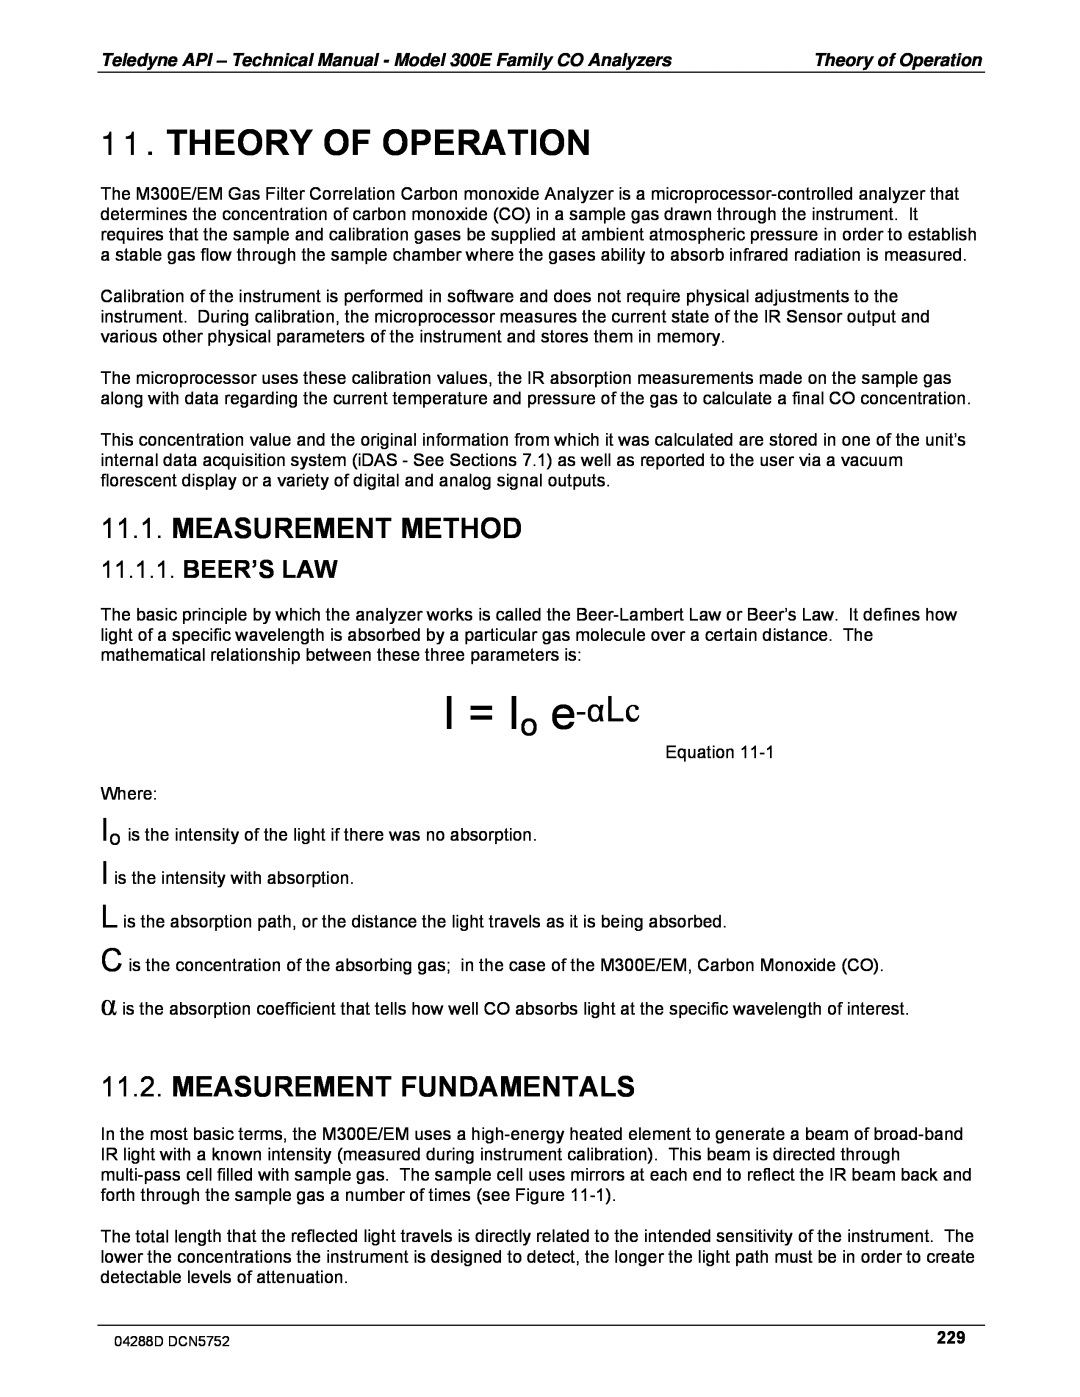 Teledyne M300EM Theory Of Operation, Measurement Method, Measurement Fundamentals, Beer’S Law, I = Io e-αLc 